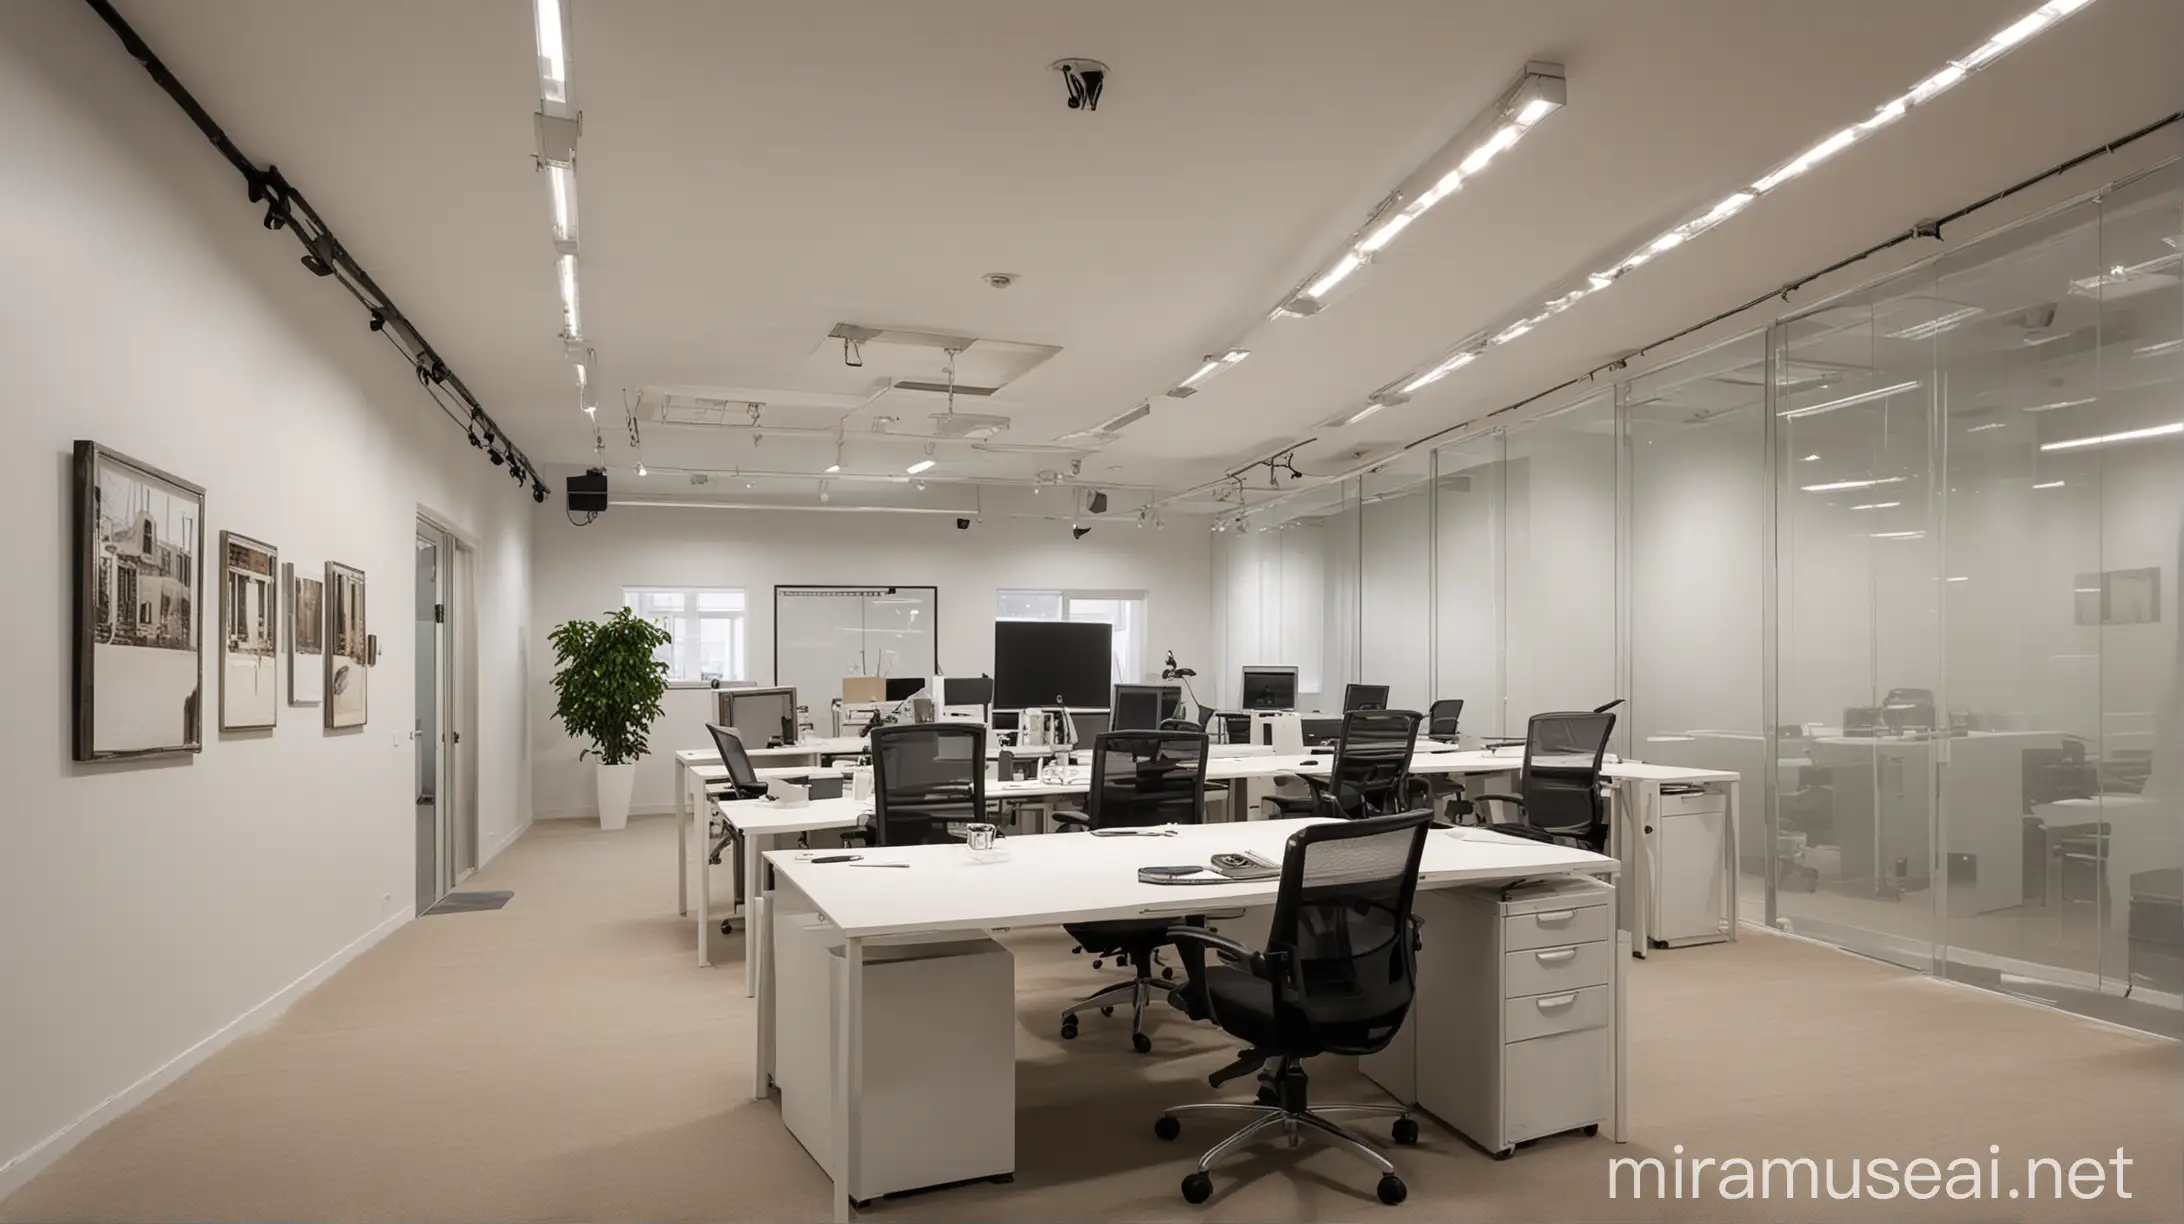 Modern Office Interior Design with Studio Lighting